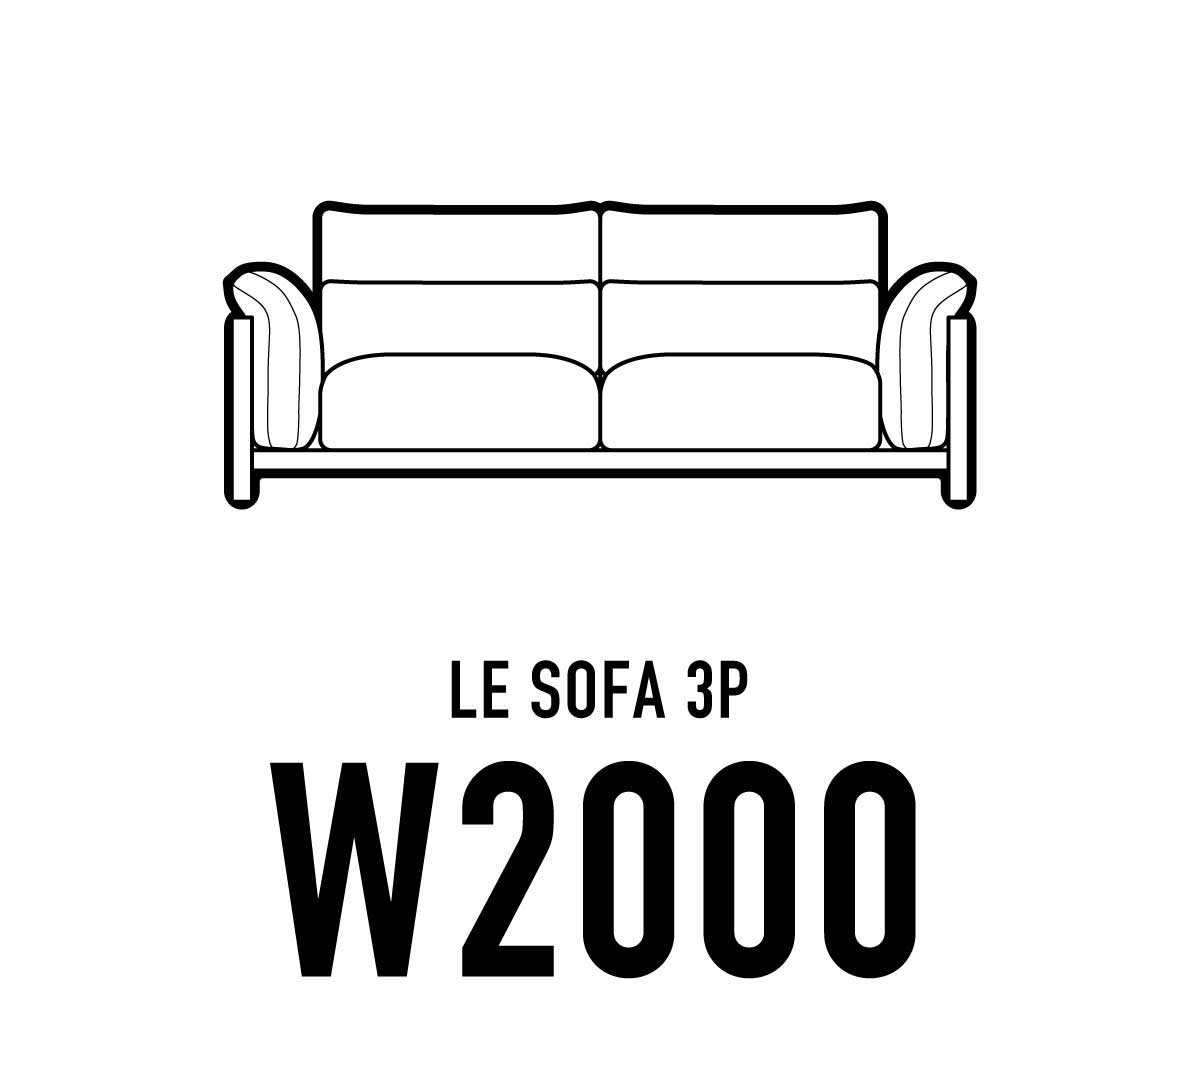 LEソファ W2000